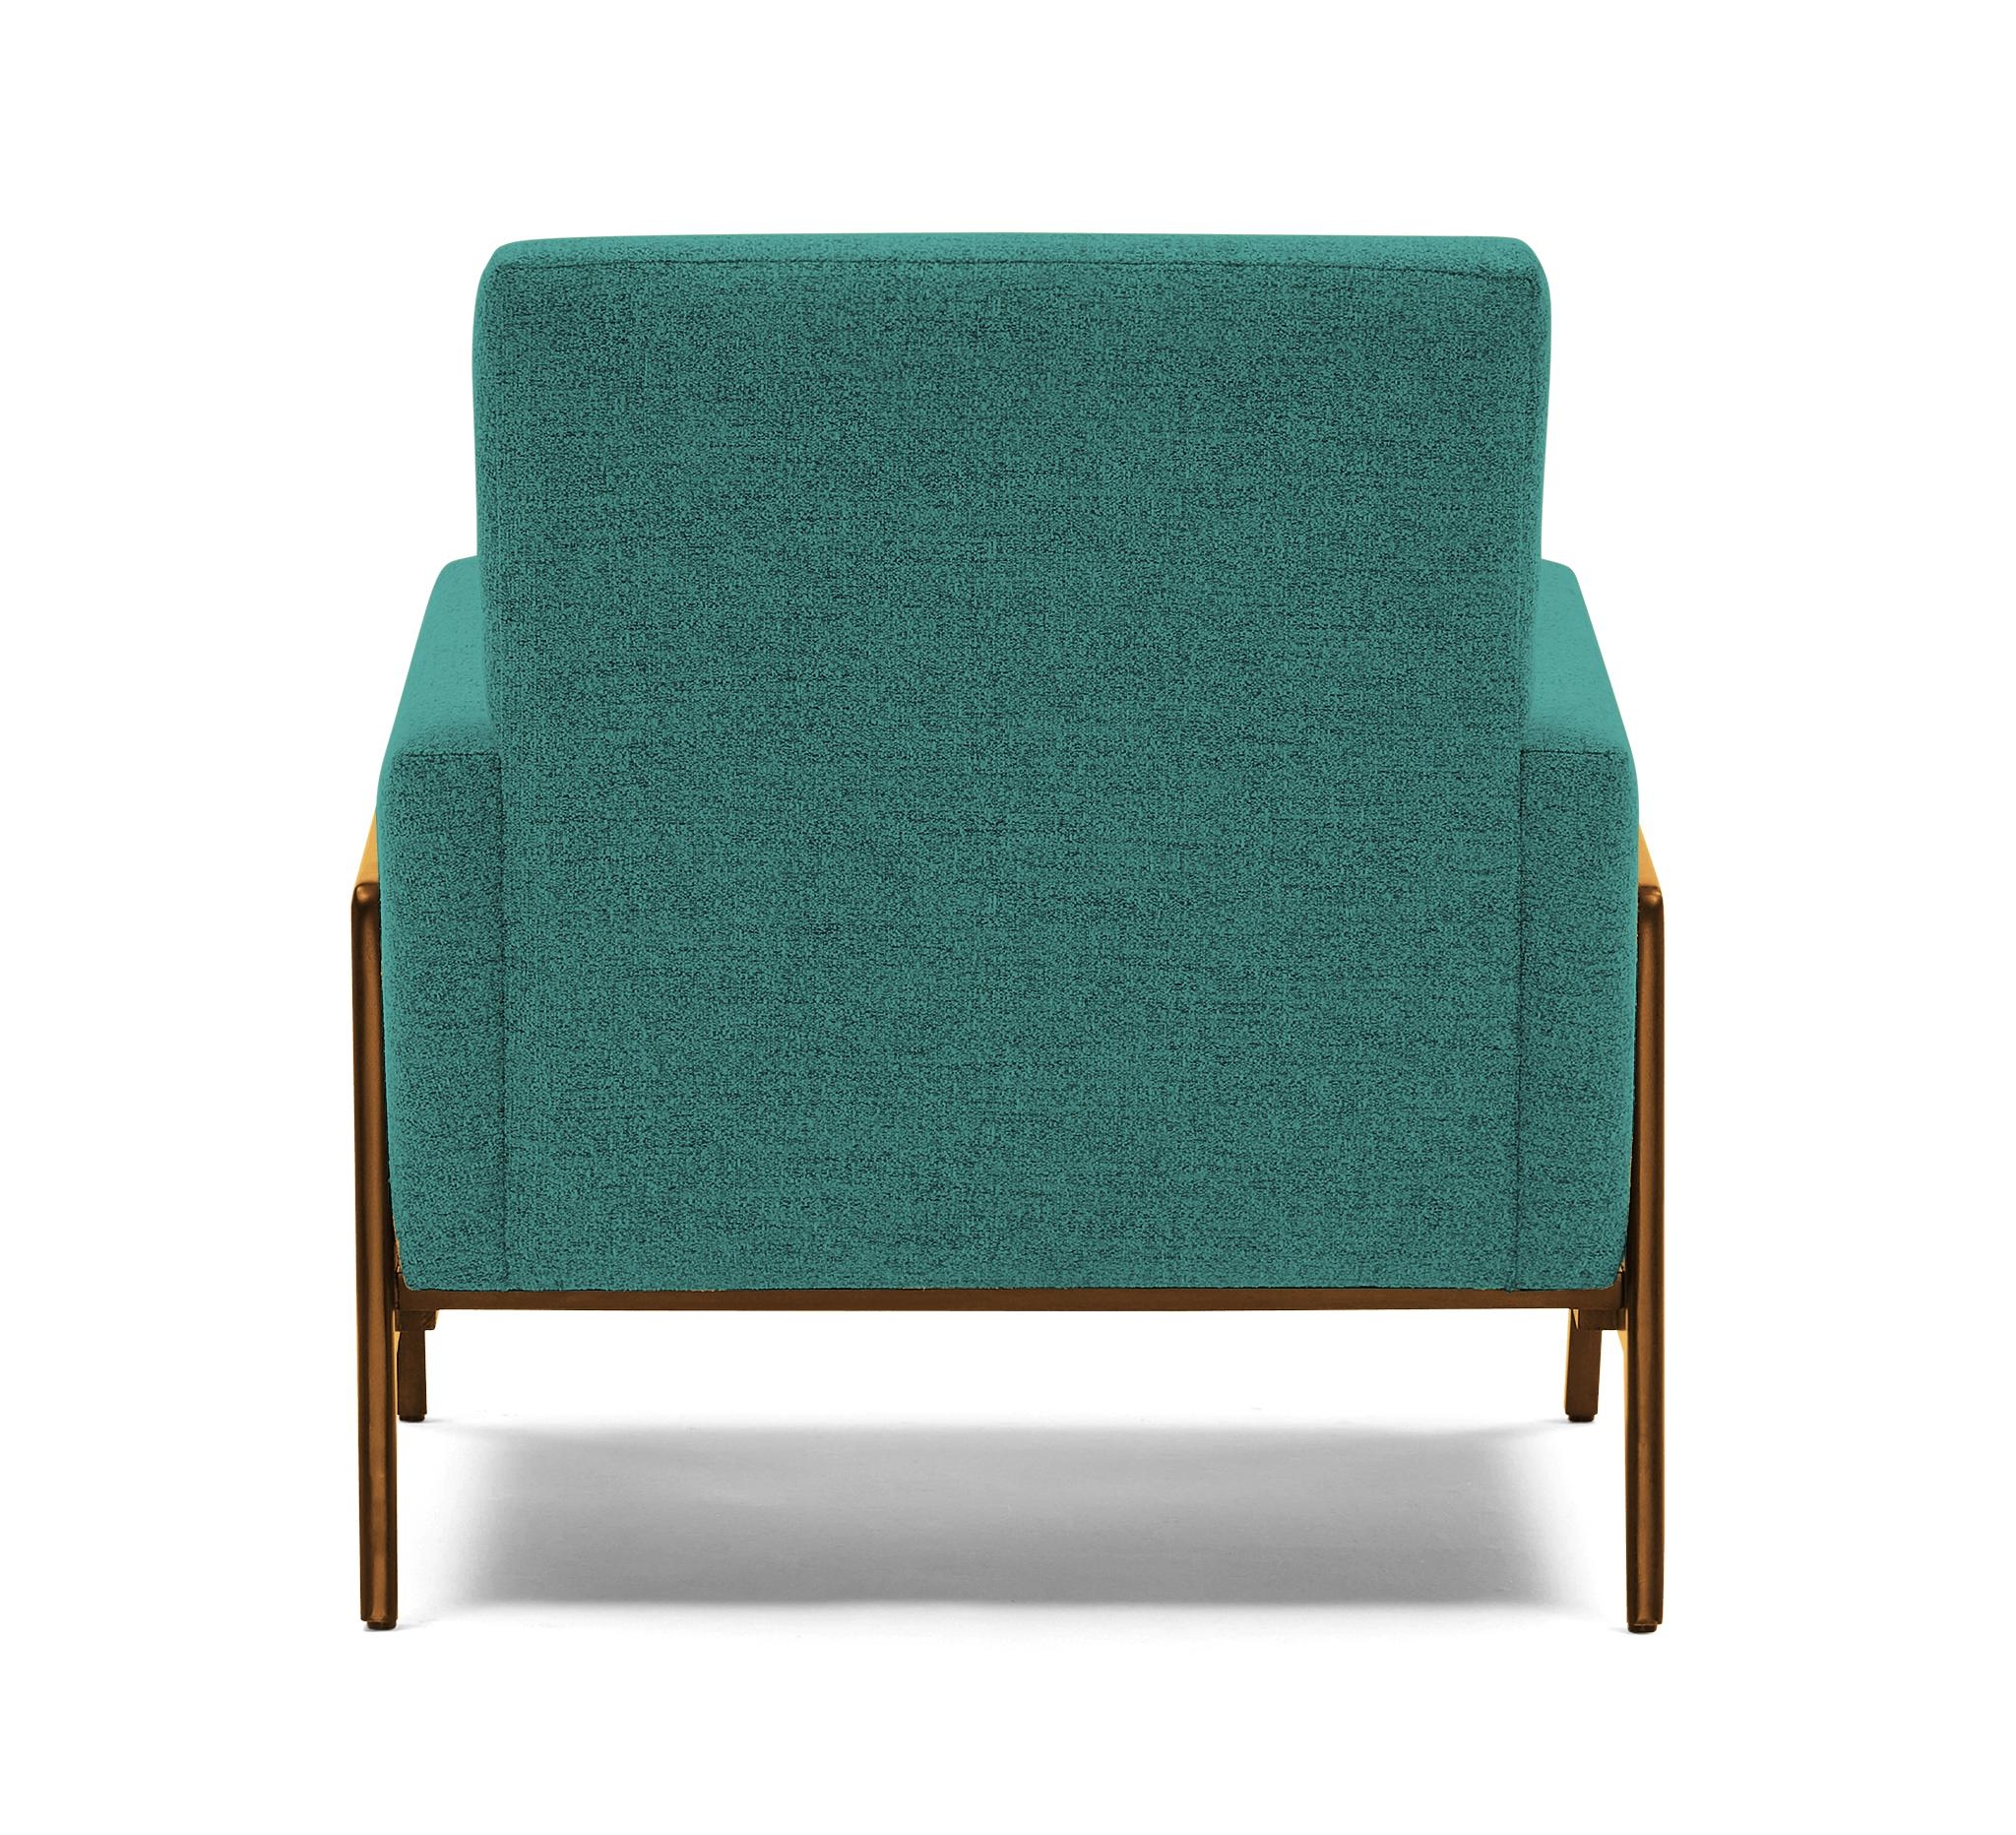 Green Clyde Mid Century Modern Chair - Essence Aqua - Mocha - Image 4